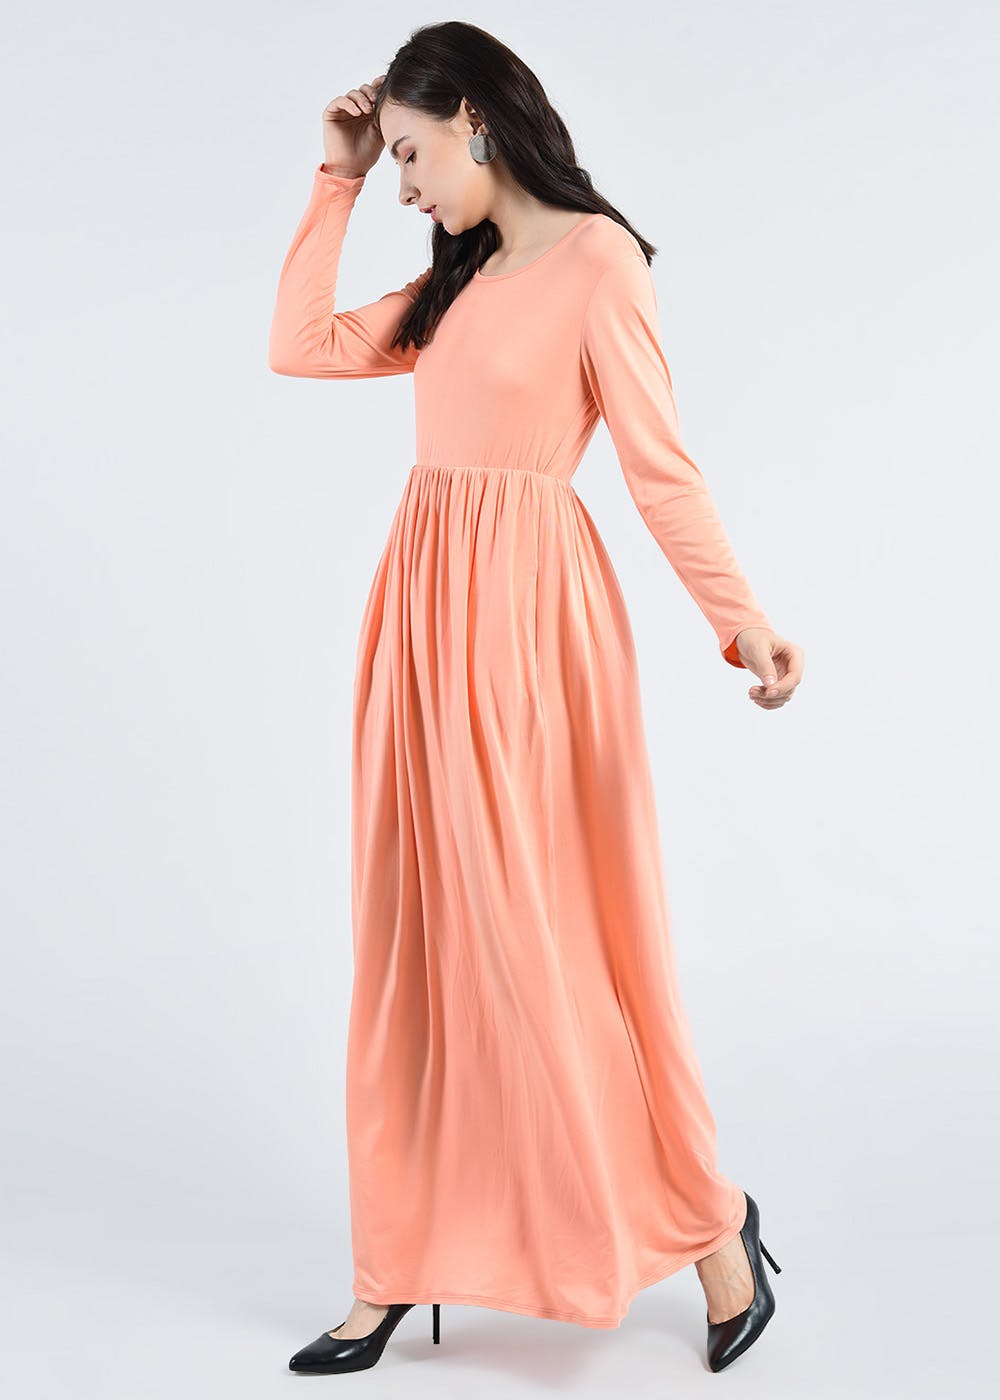 Dresses for Women | Best Women's Dresses Online - Lulus | Long sequin dress,  Sparkle dress long, Gold dresses long